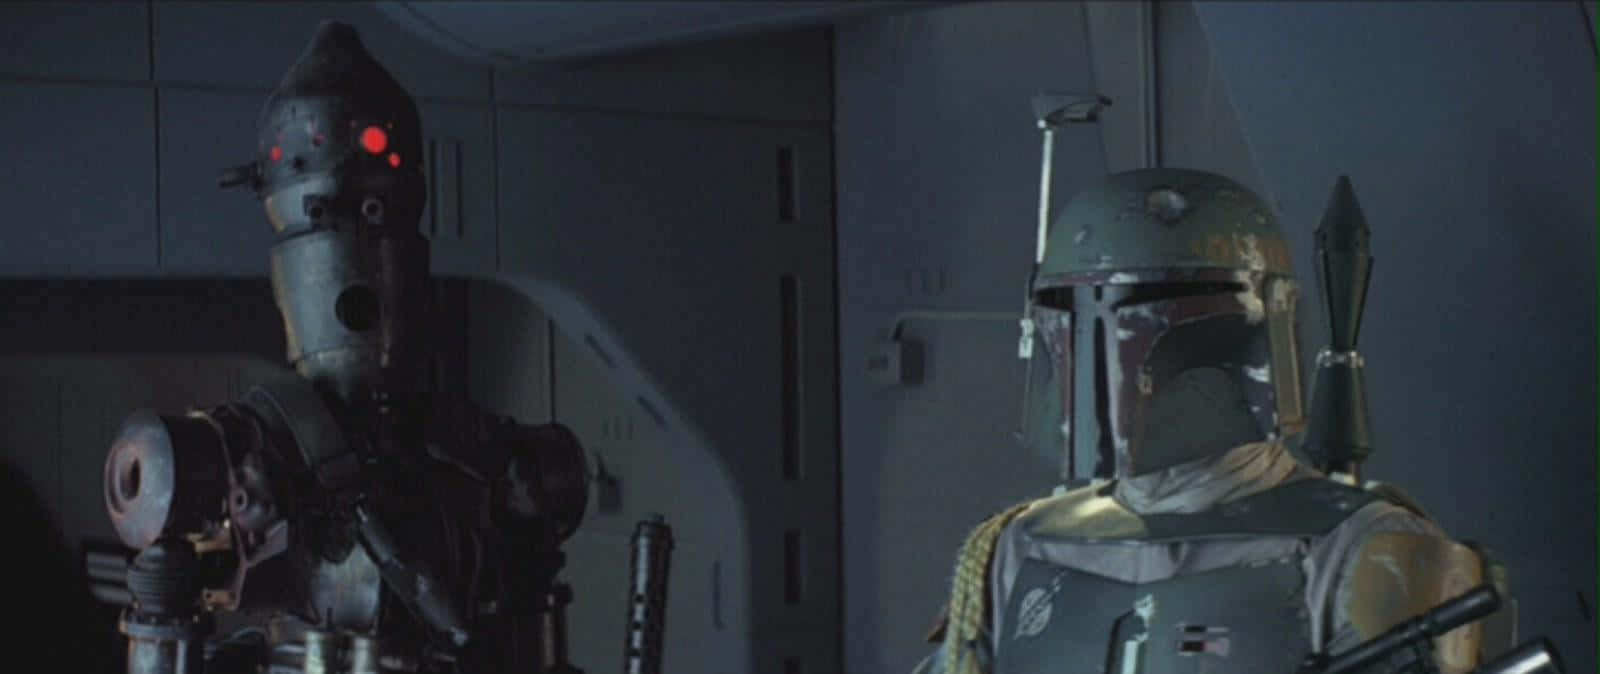 A close-up of the droid assassin IG-88 Wallpaper